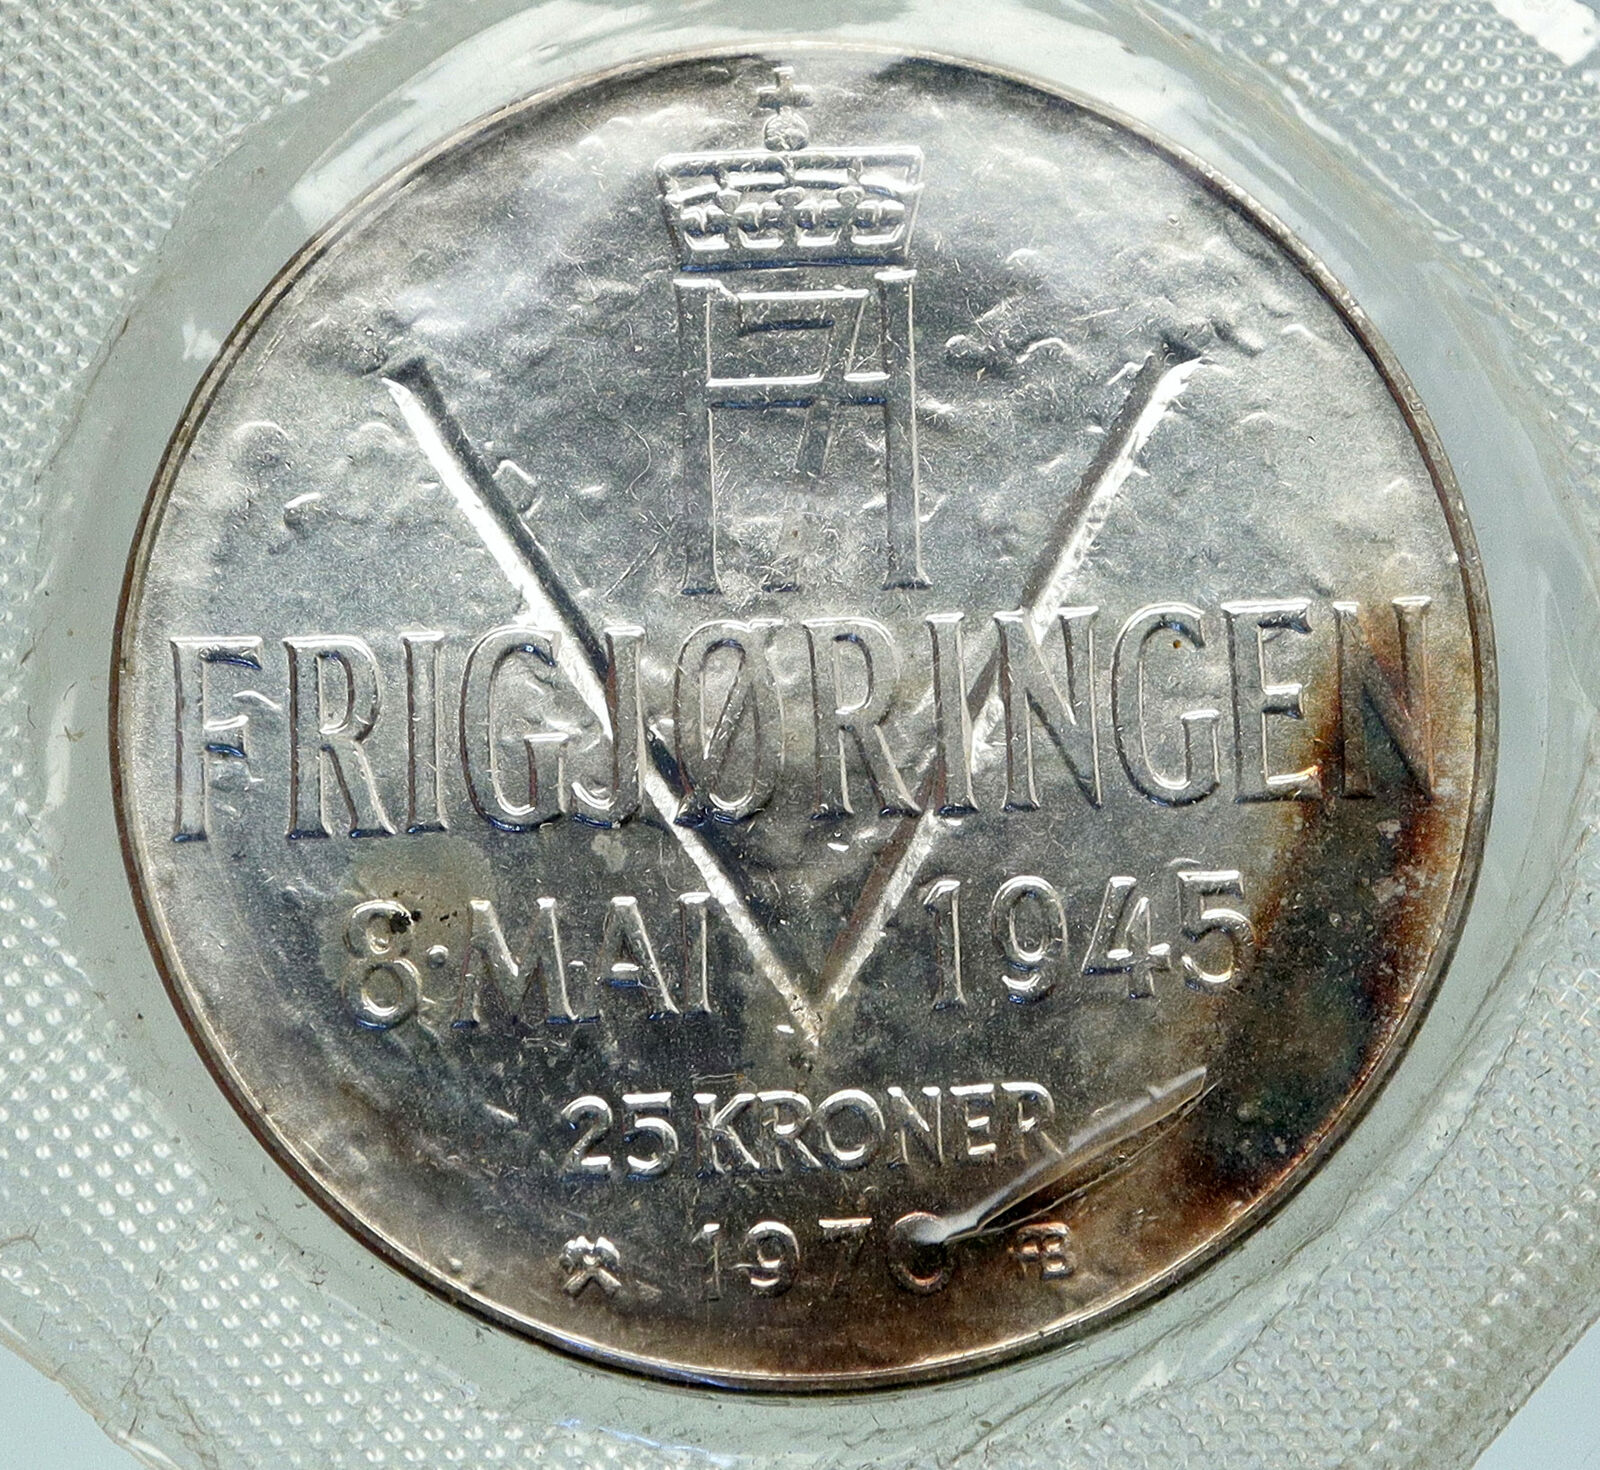 1970 NORWAY KING Olav V Haakon VII Norwegian 25 KR Silver 25 Kronor Coin i86909